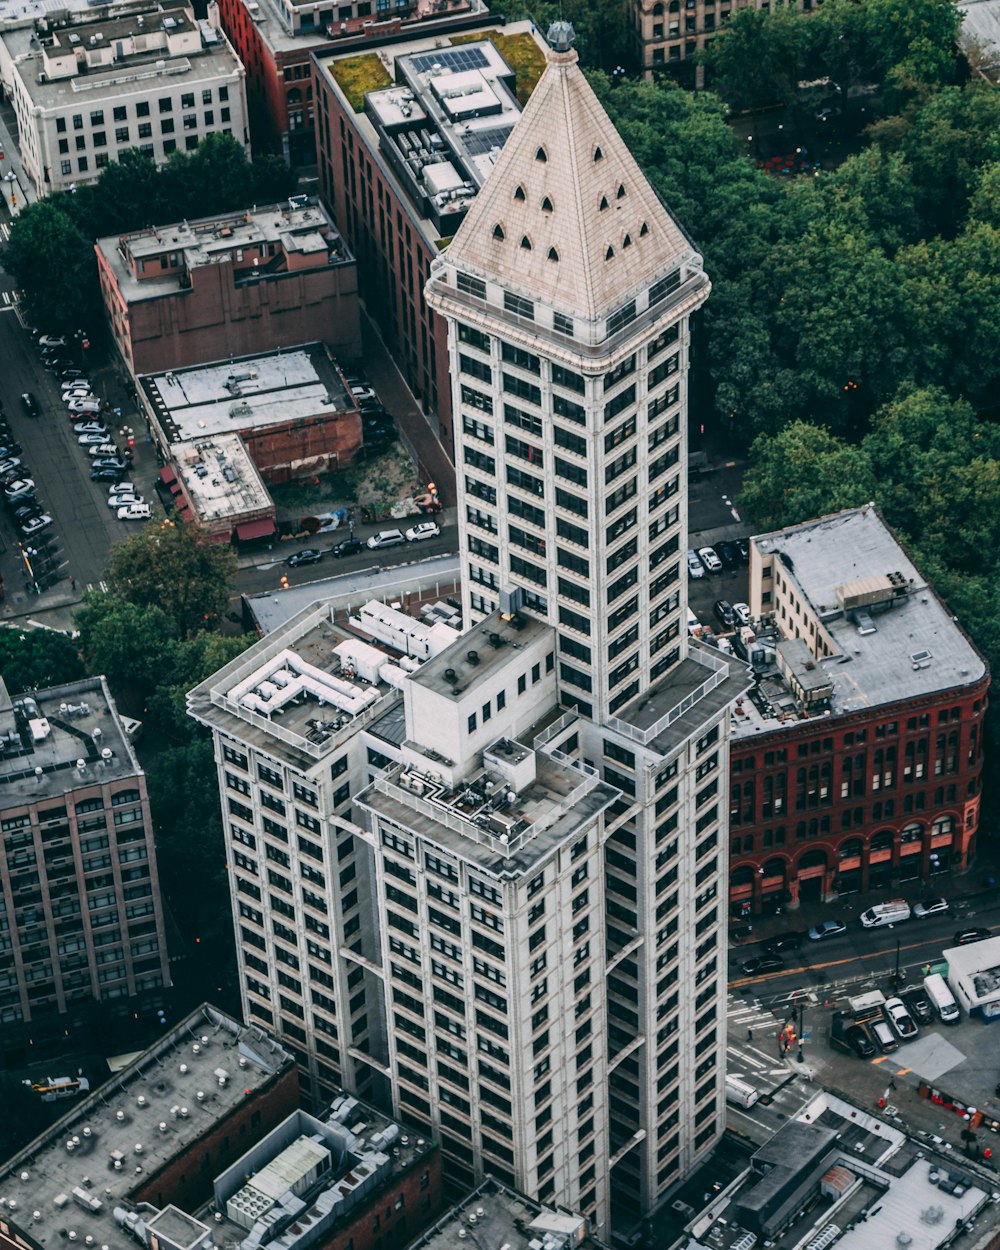 beige high-rise building